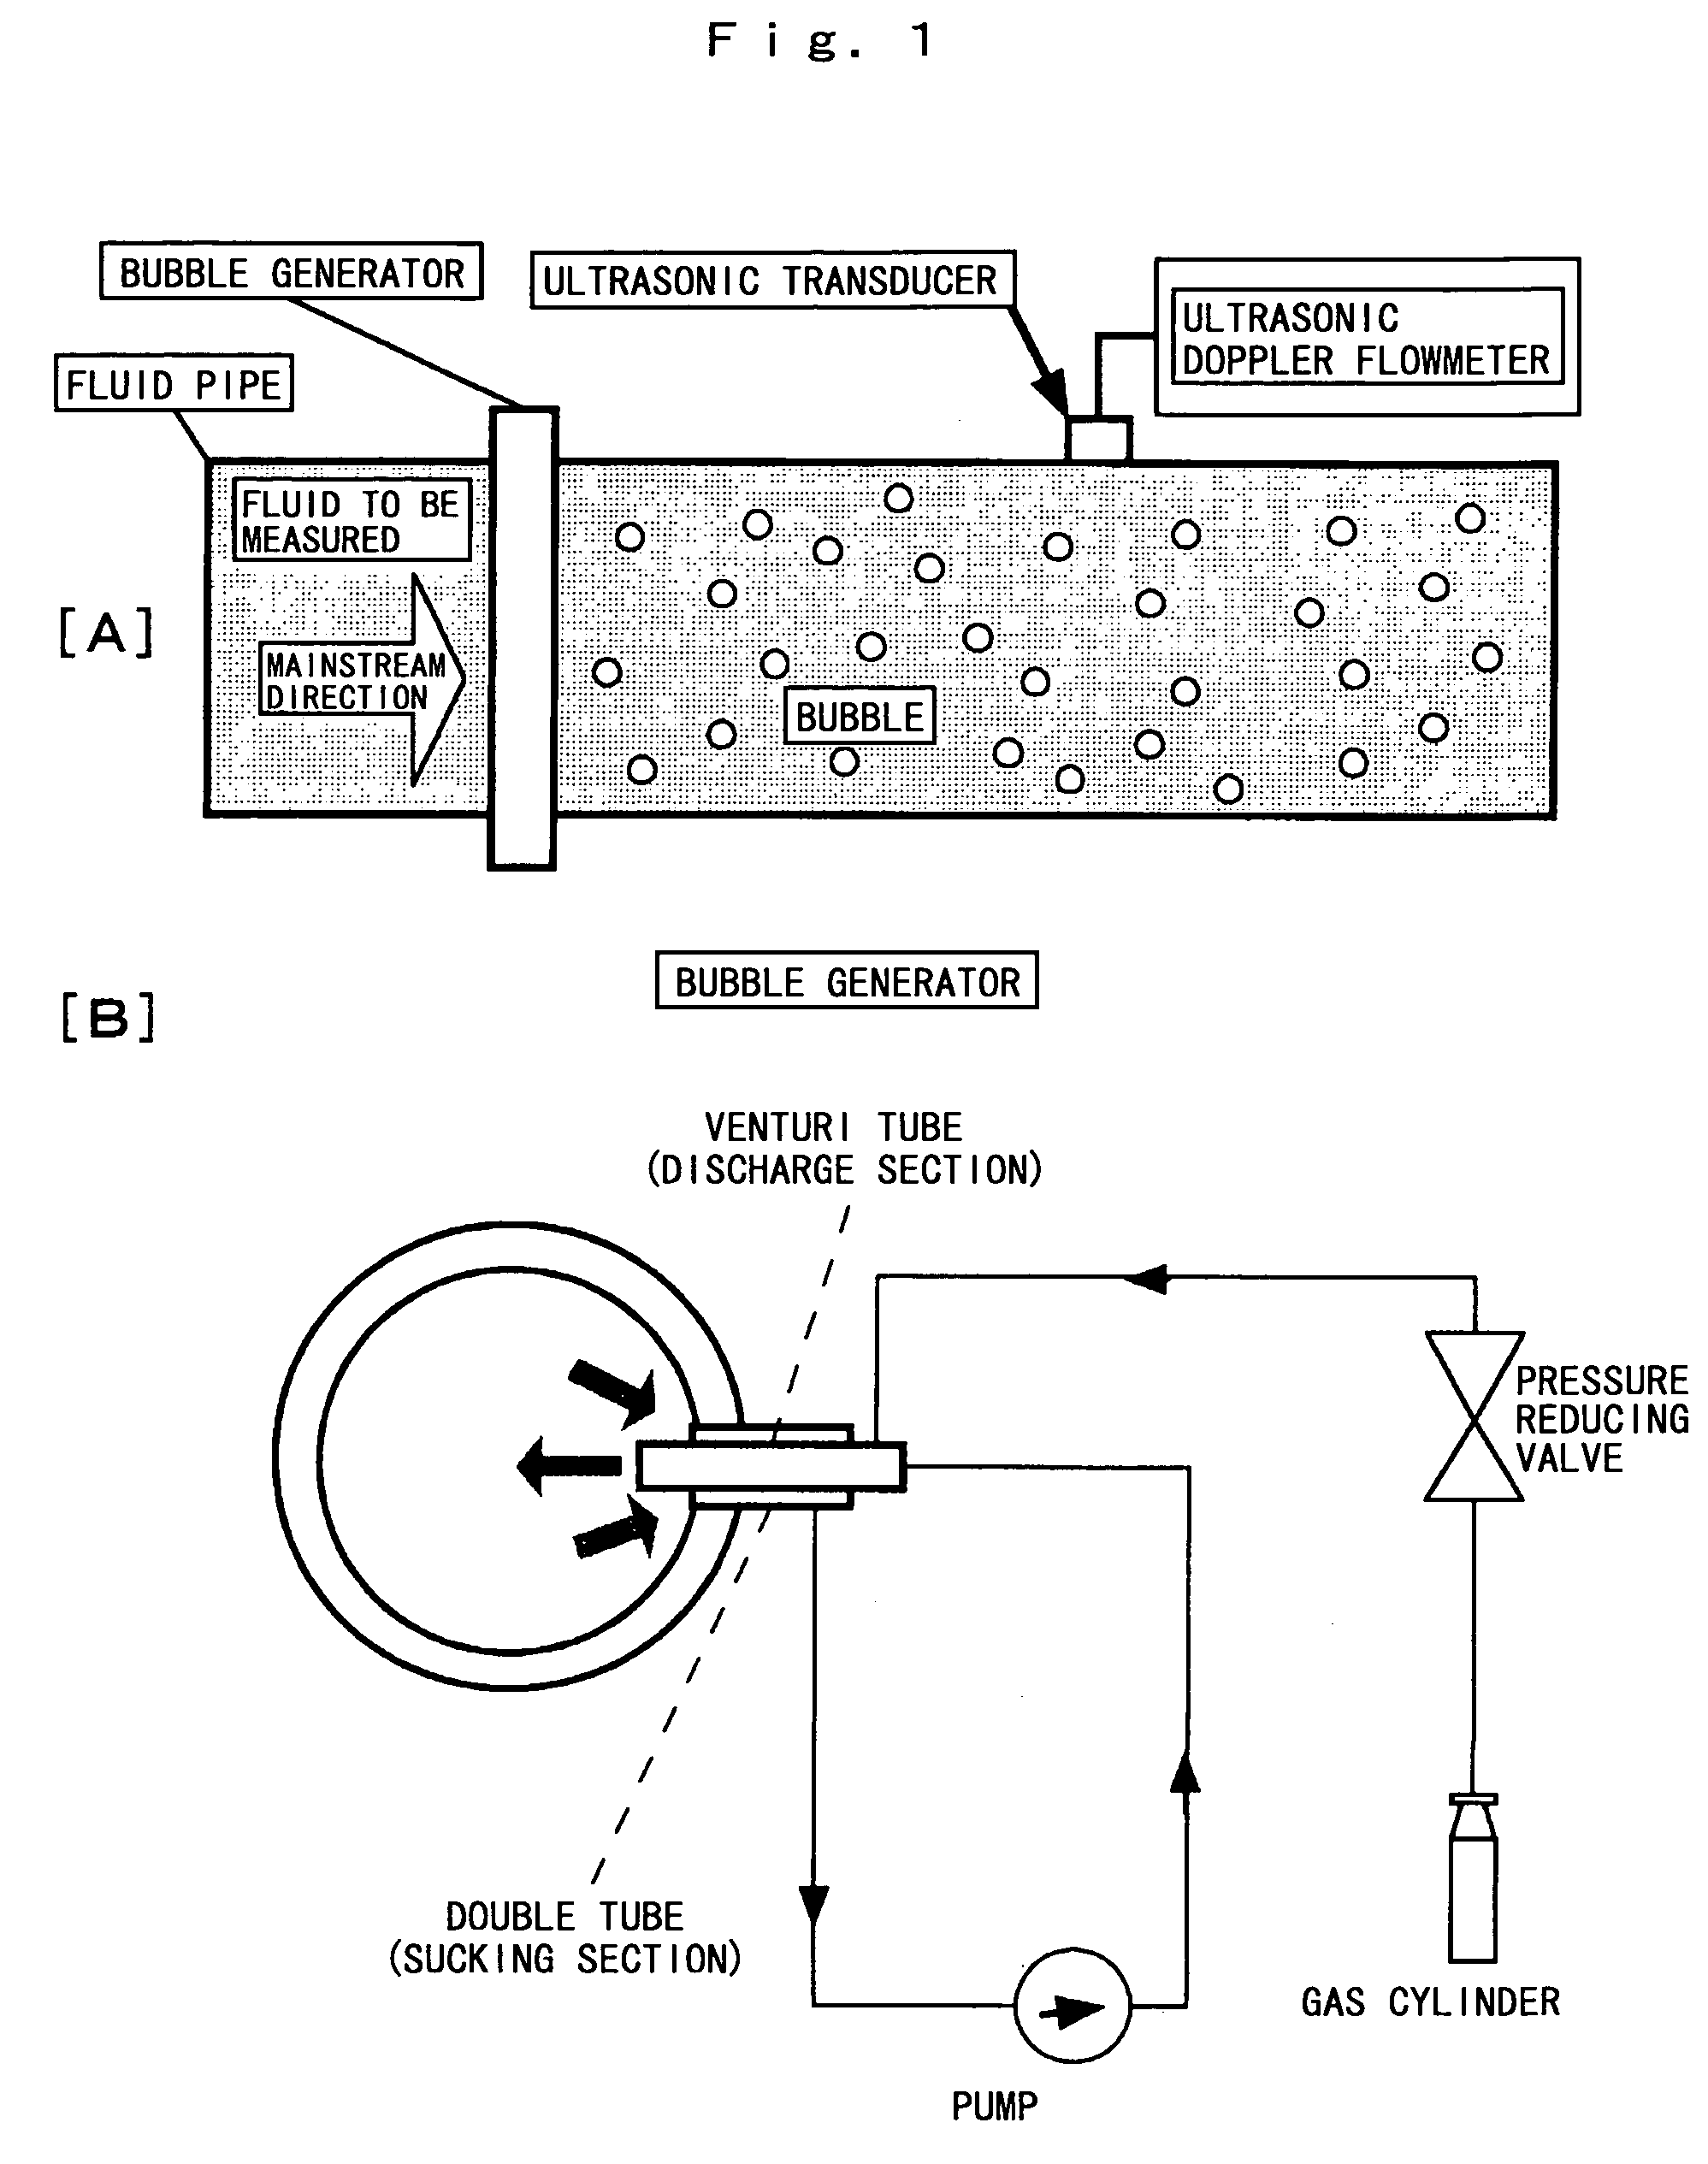 Bubble generator for use in doppler ultrasonic flowmeter and doppler ultrasonic flowmeter